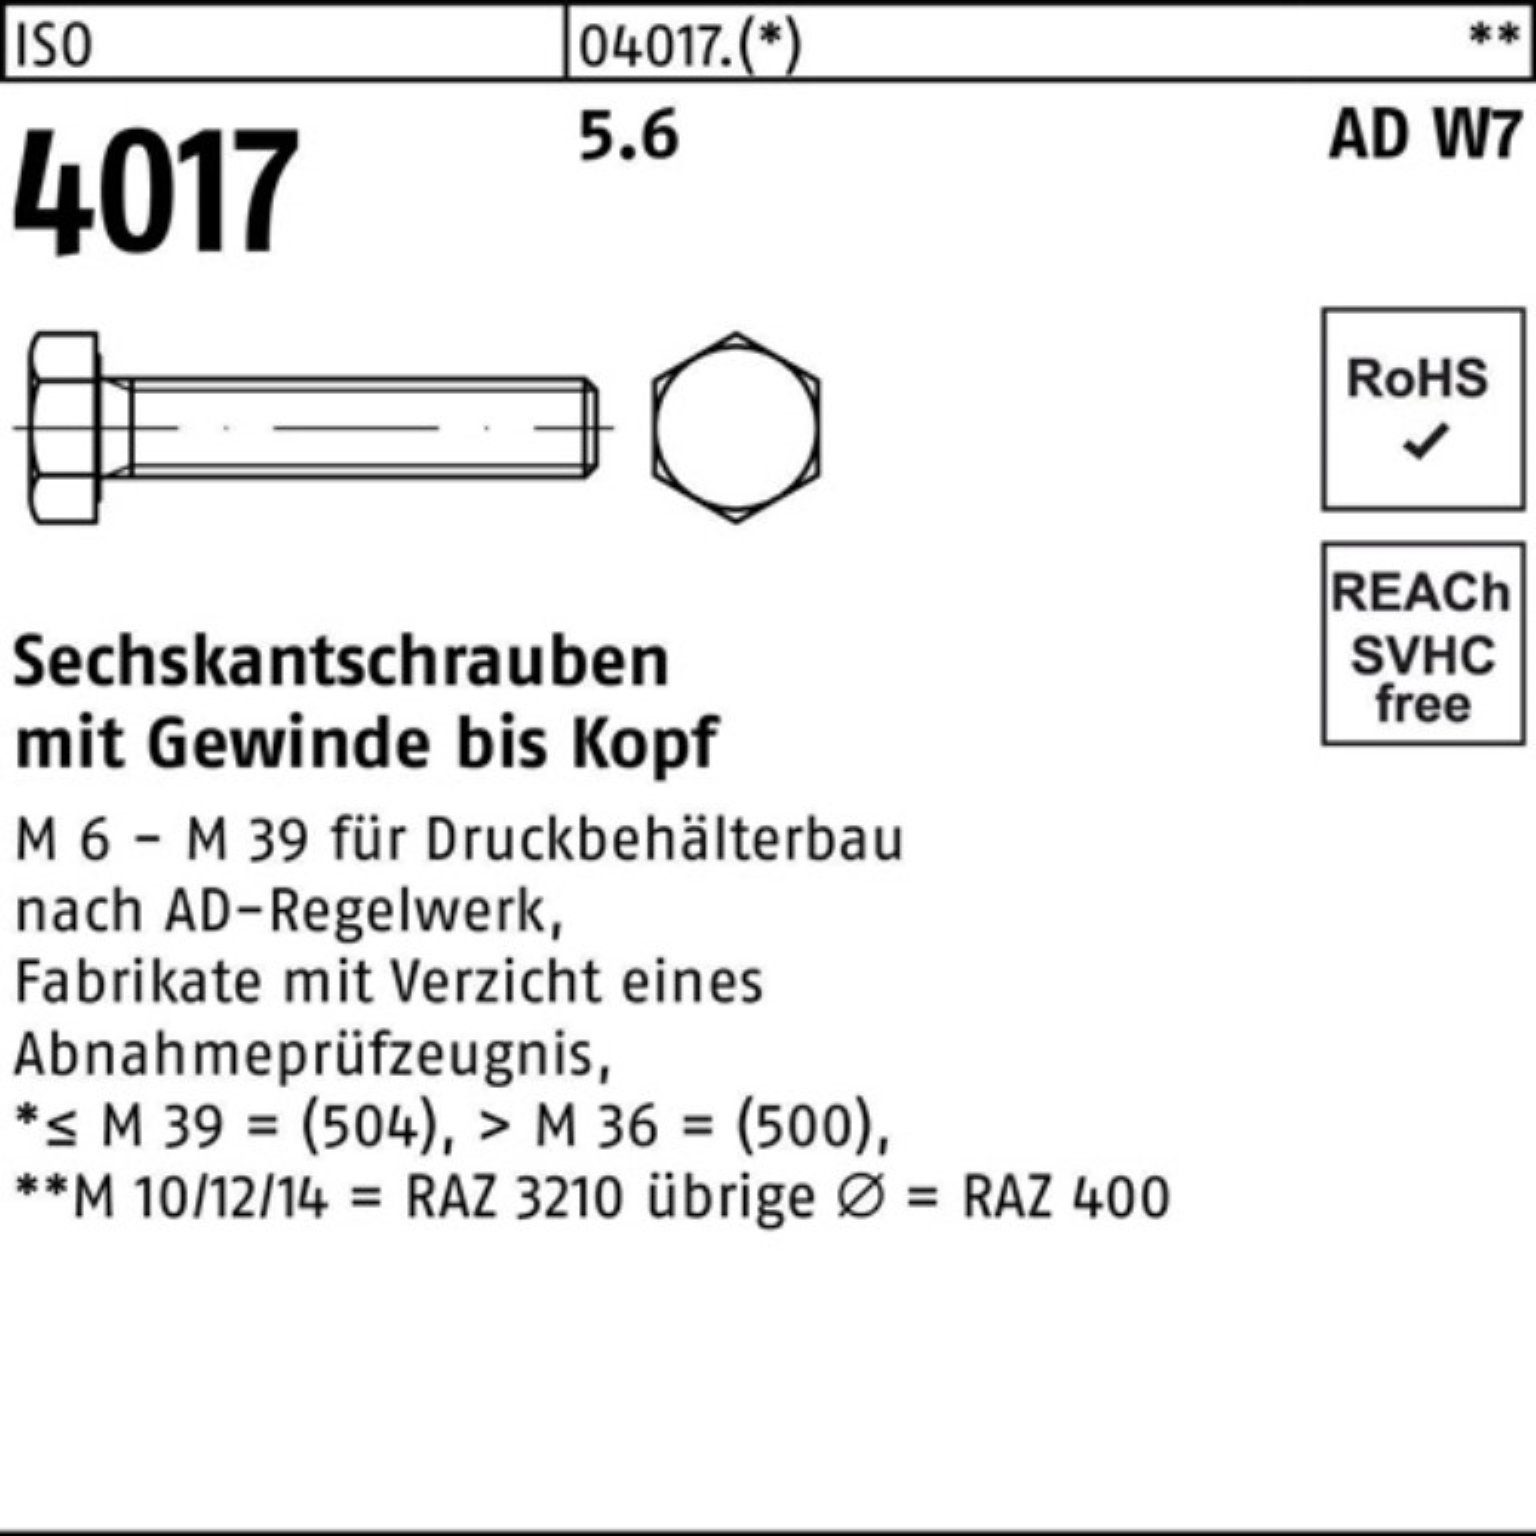 M20x 4017 100er W7 I ISO Bufab Sechskantschraube Sechskantschraube 90 Pack 5.6 VG 25 AD Stück